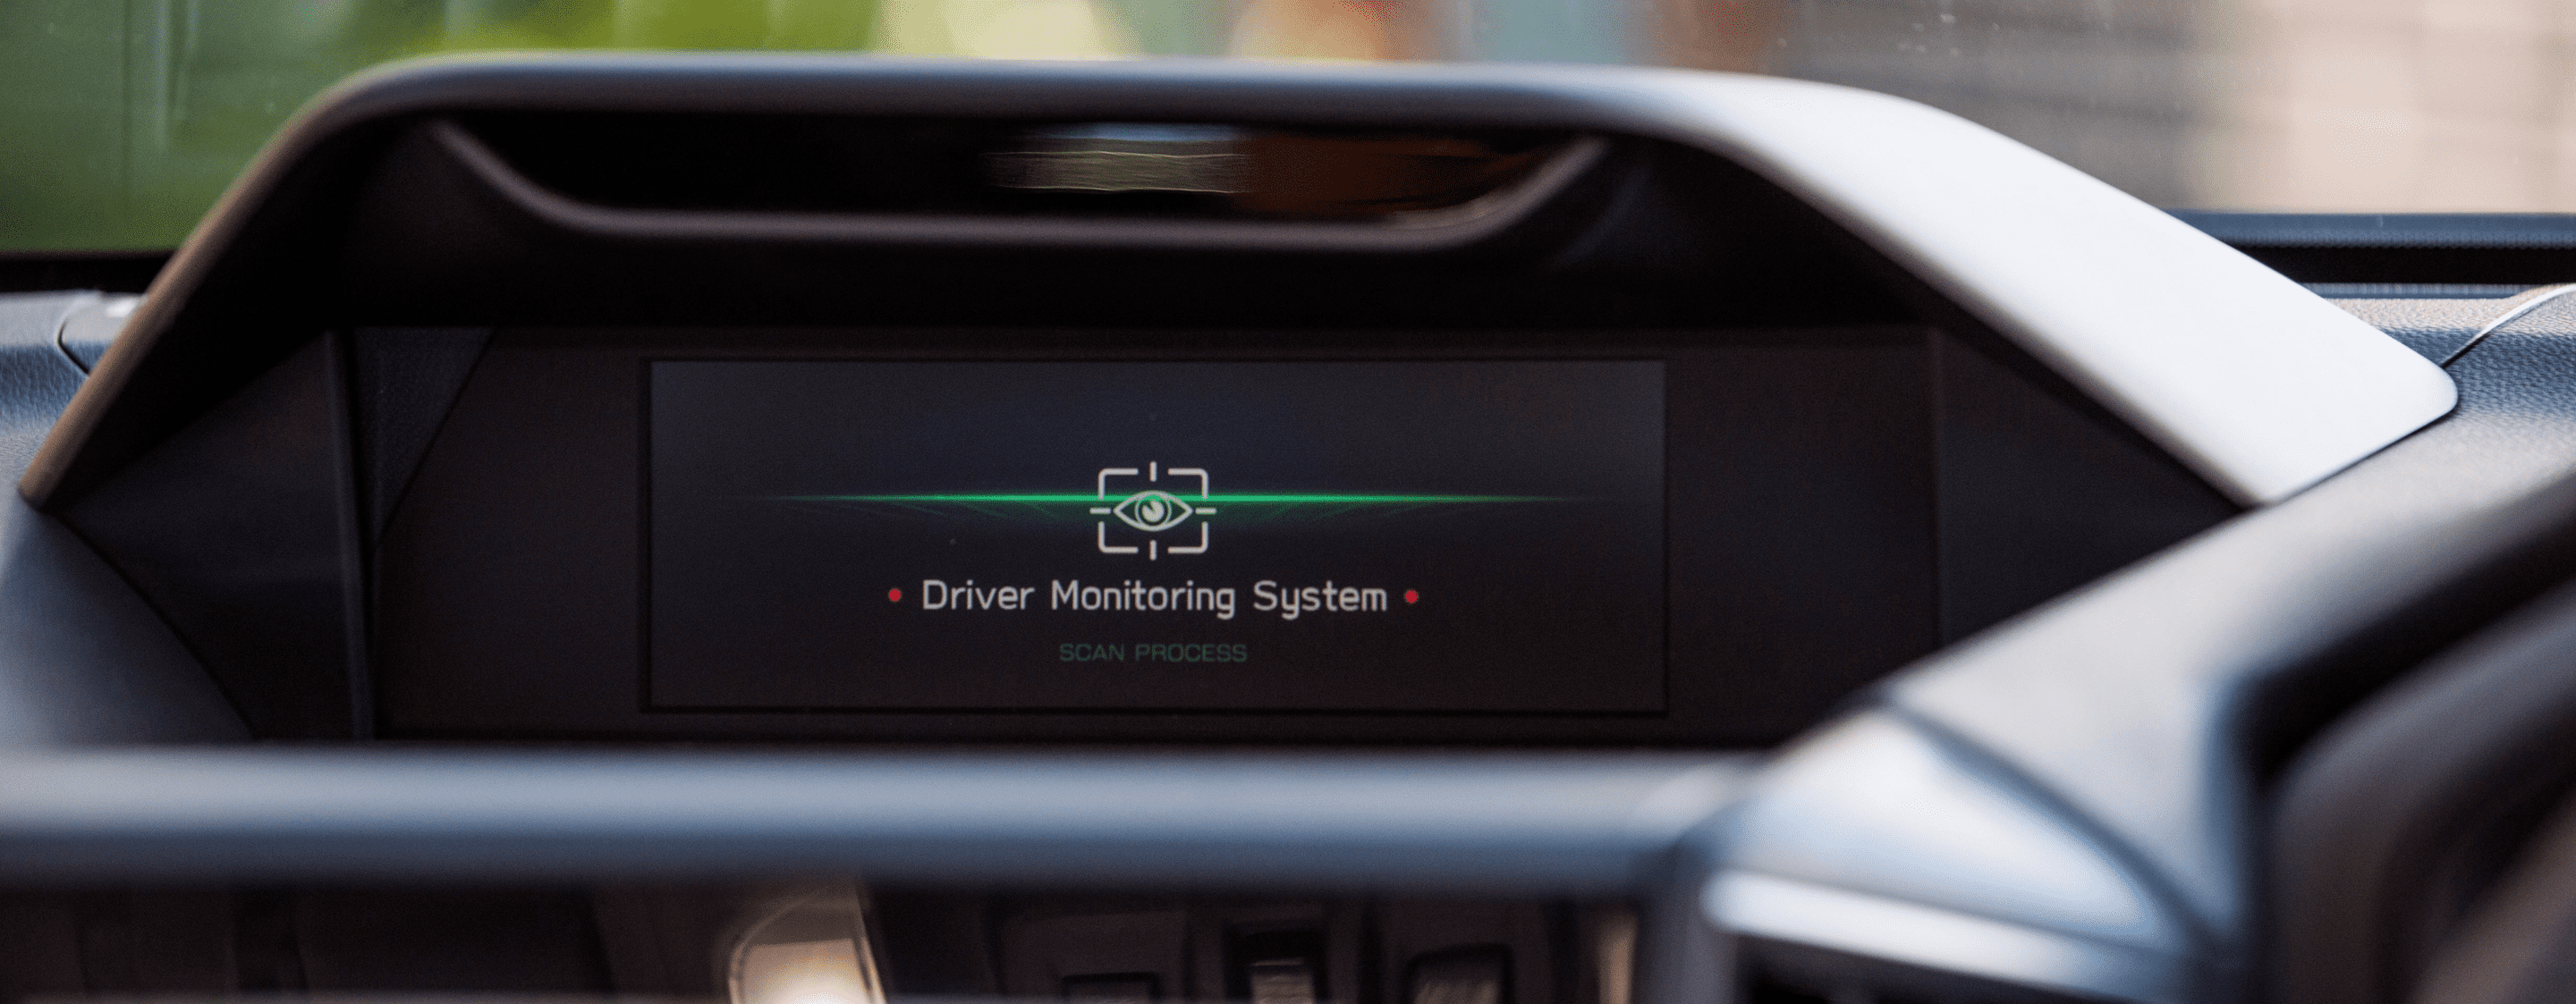 Driver Monitoring System | Subaru Australia